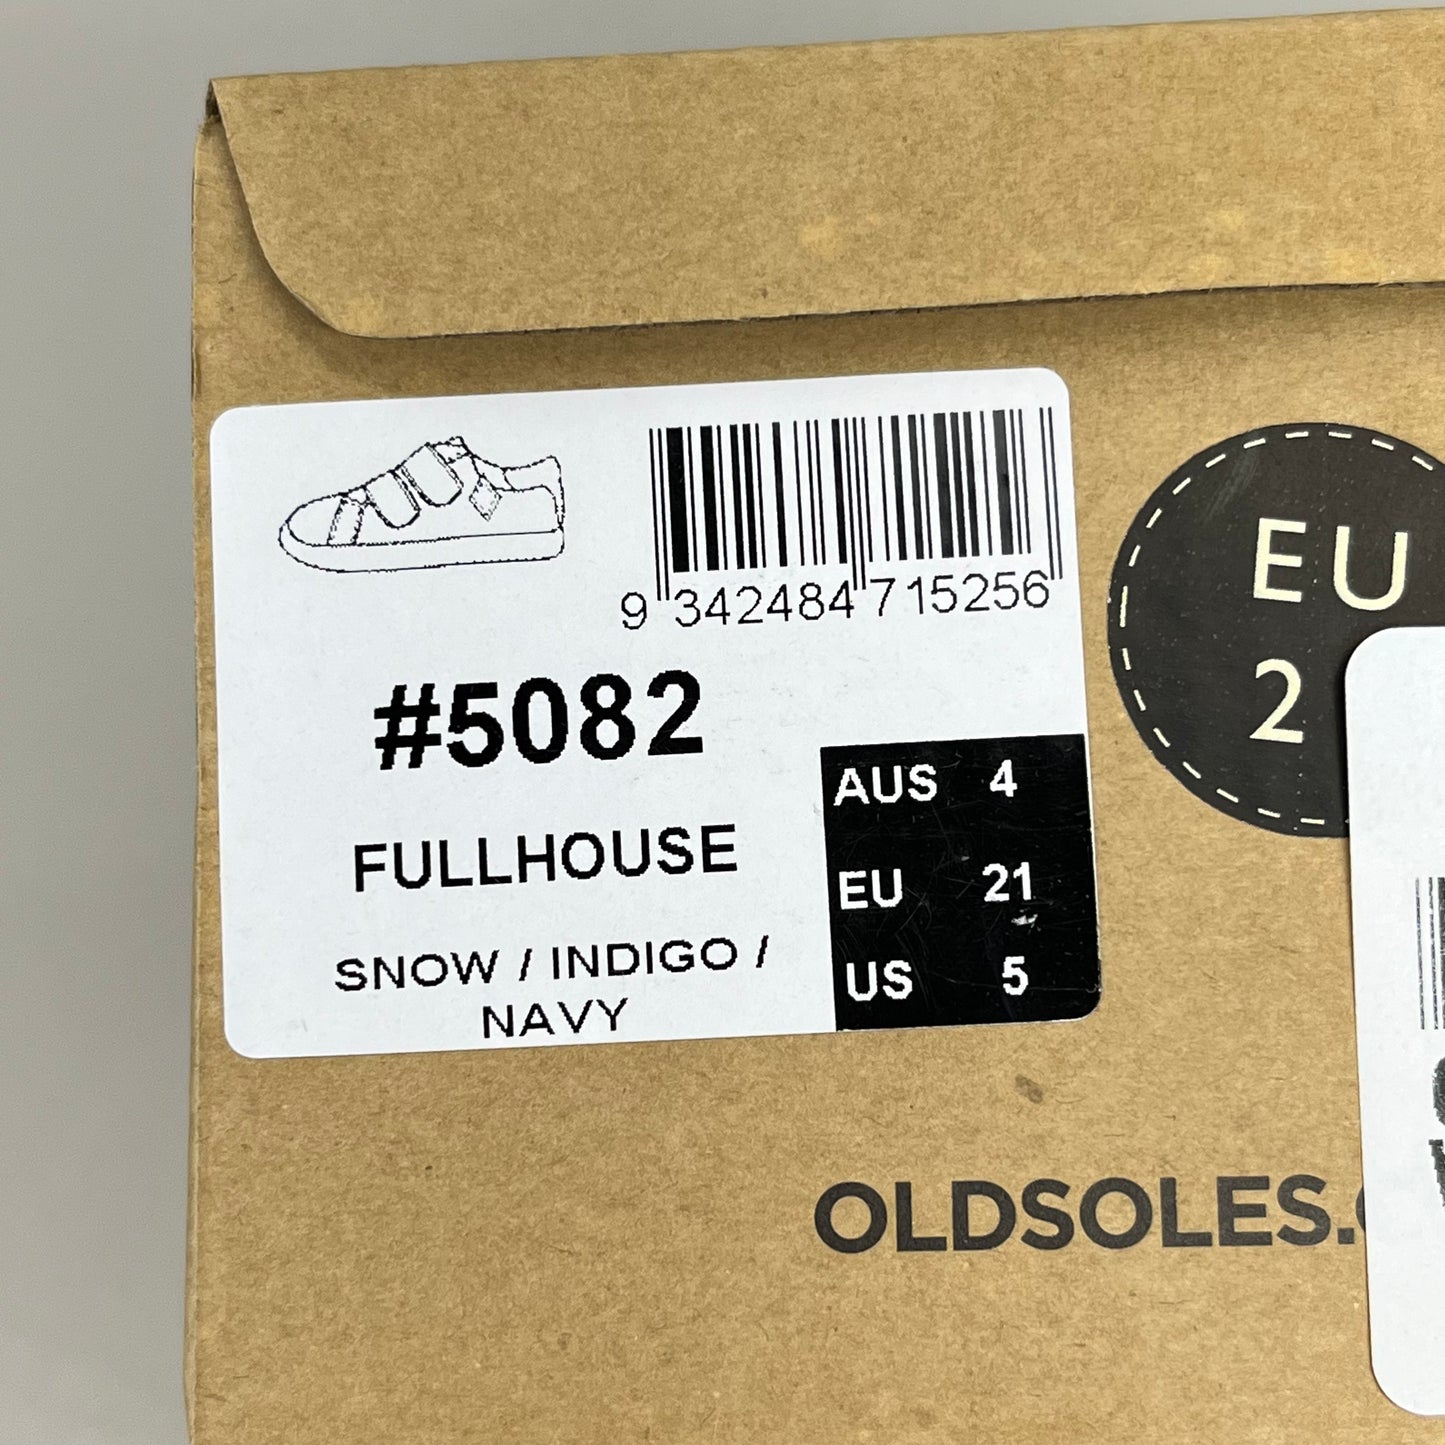 OLD SOLES Fullhouse Boys & Girls Leather Shoes Kid's Sz 5 EU 21 Snow / Indigo / Navy #5082